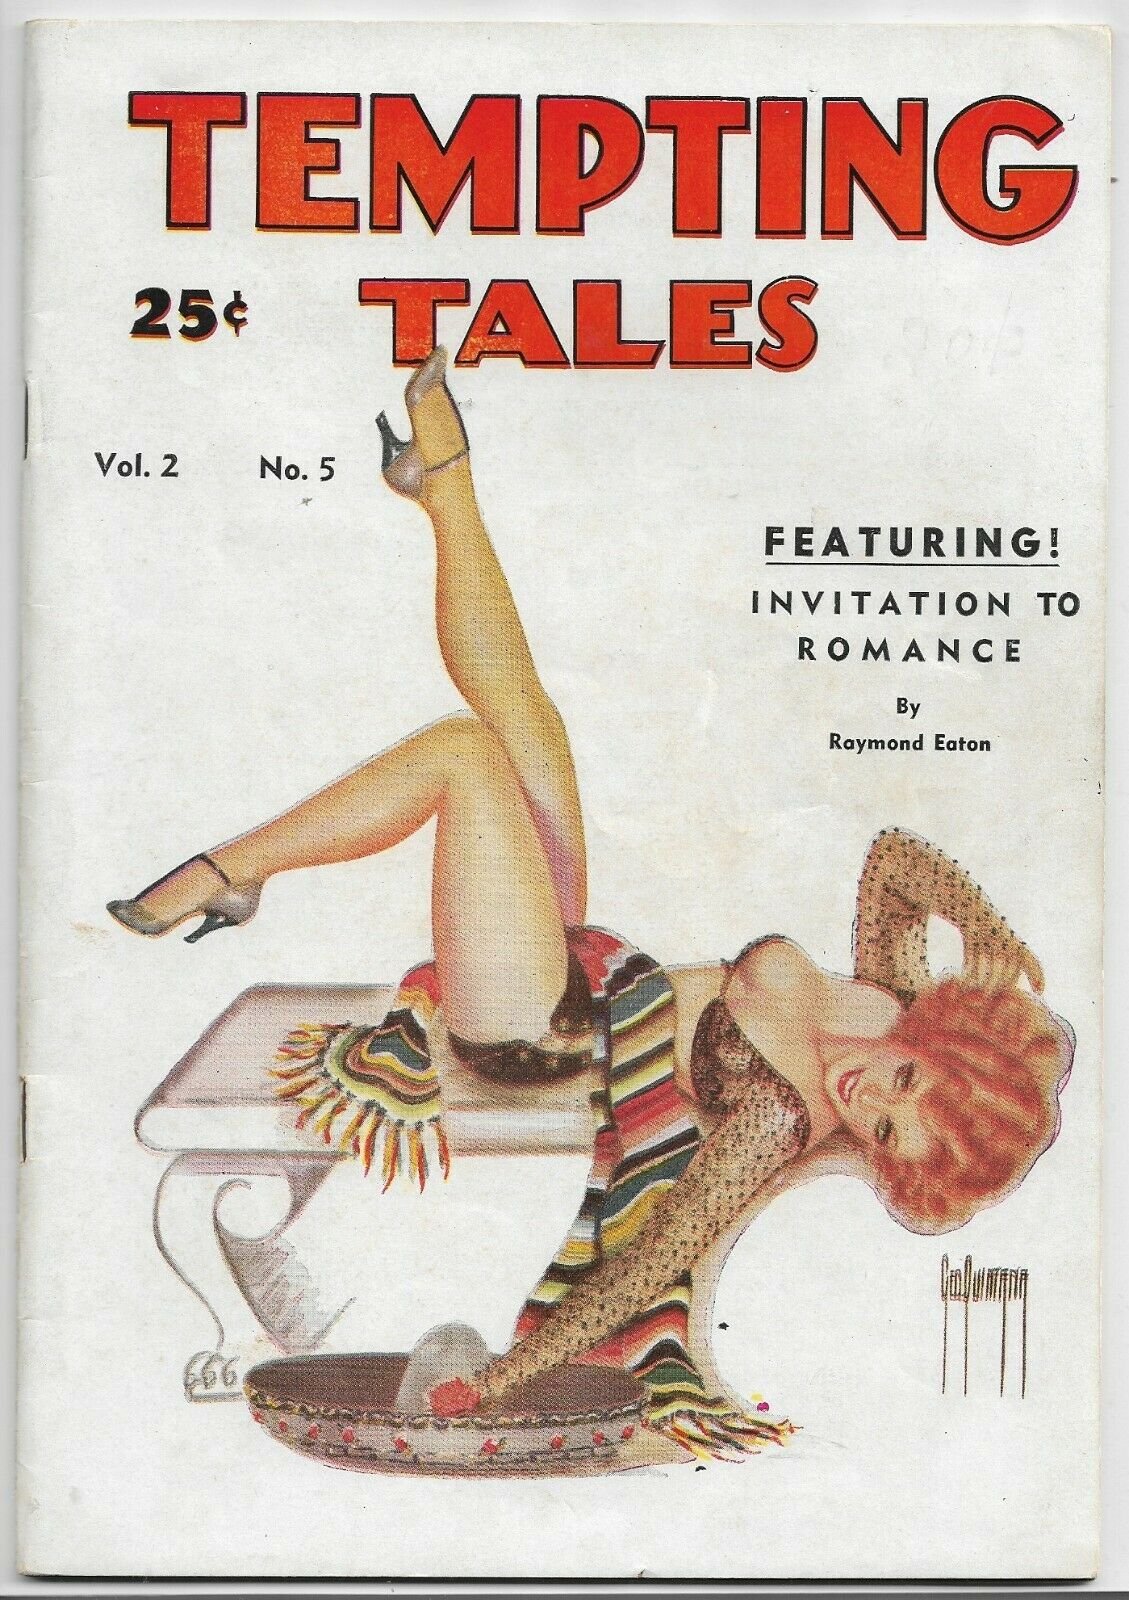 Temping Tales - 1930s